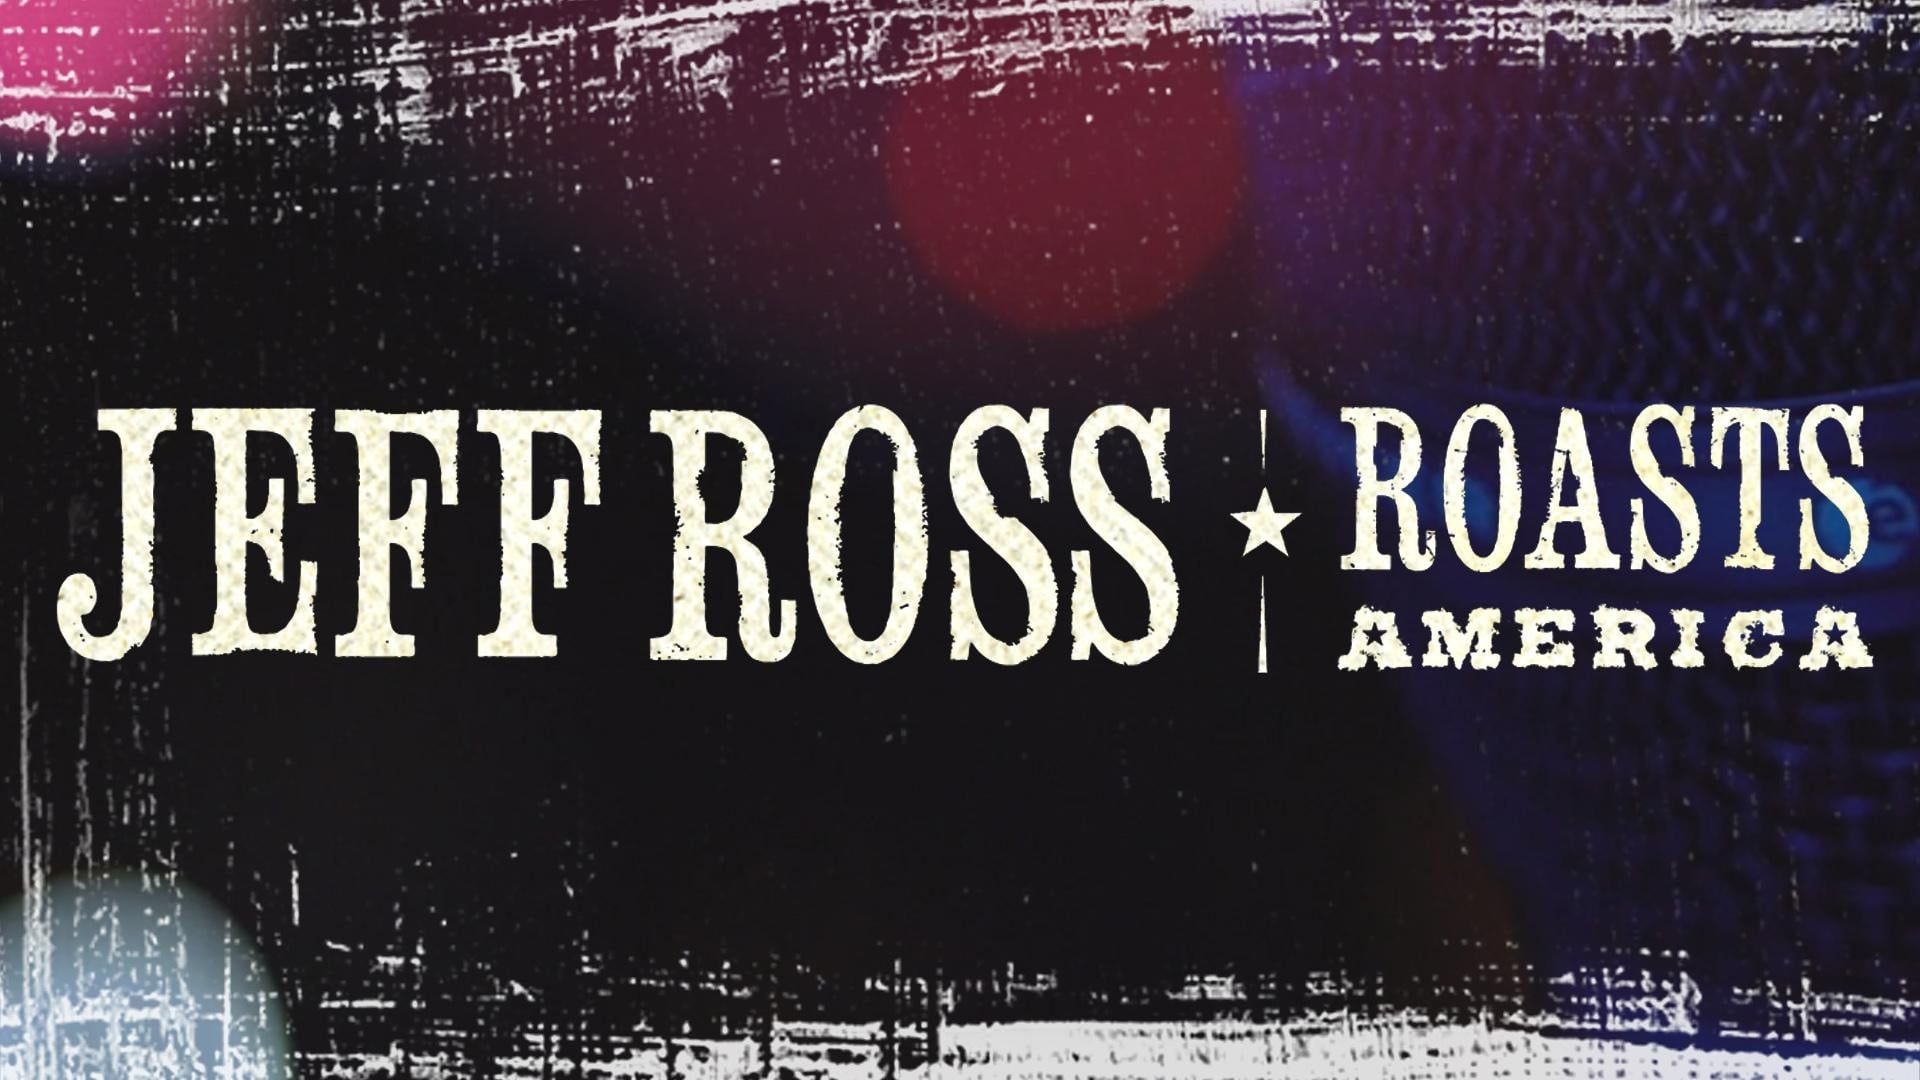 Jeff Ross Roasts America background